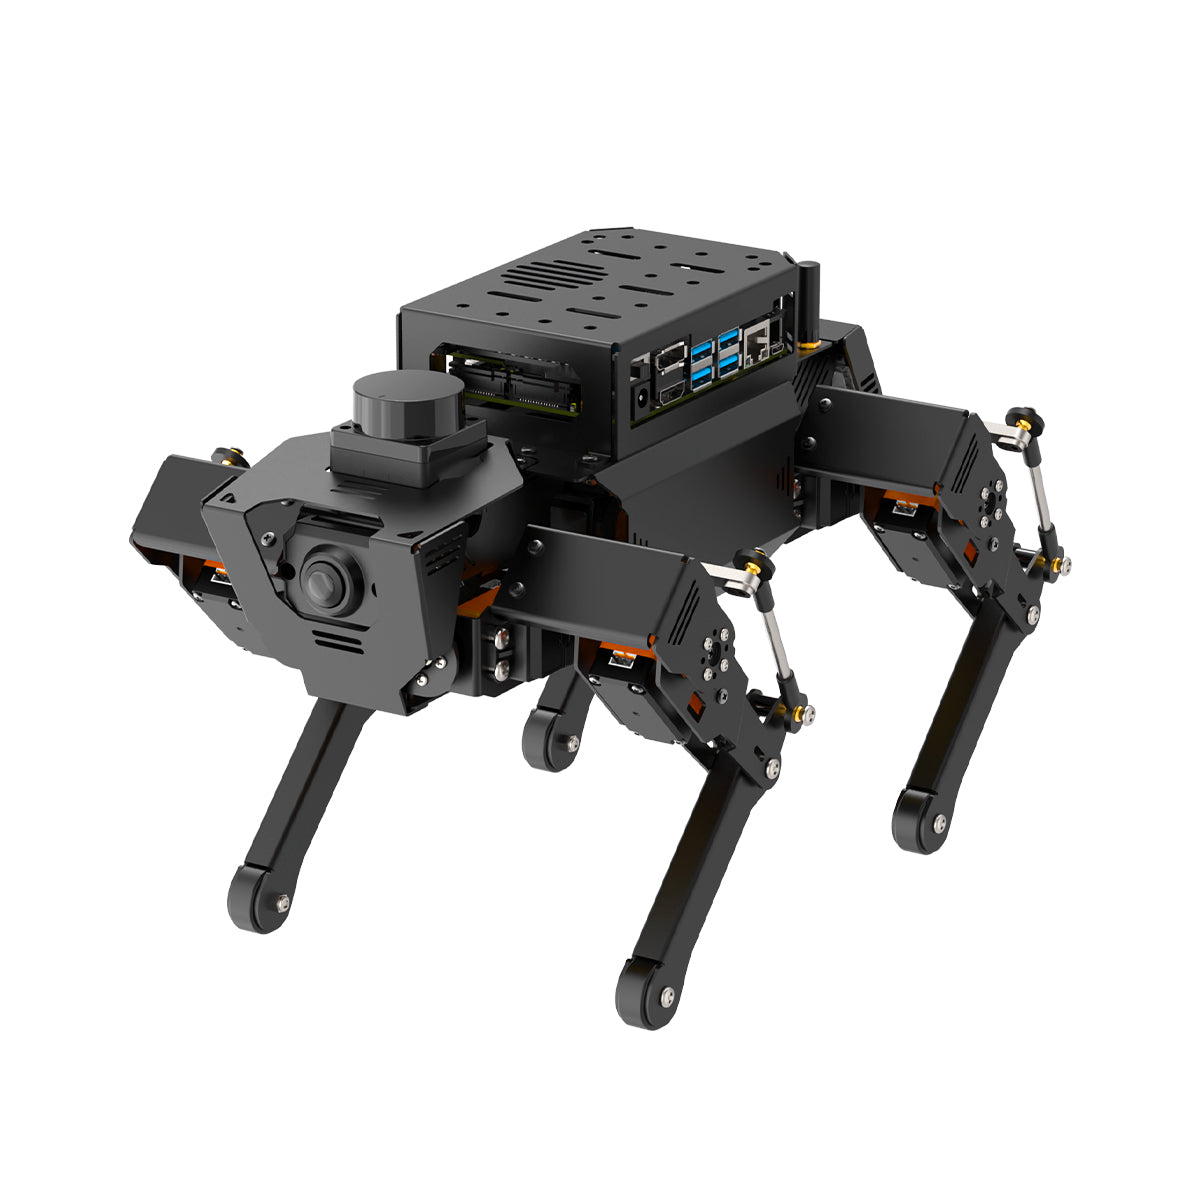 ROSPug Quadruped Bionic Robot Dog Powered by Jetson Nano ROS Open Source Python Programming